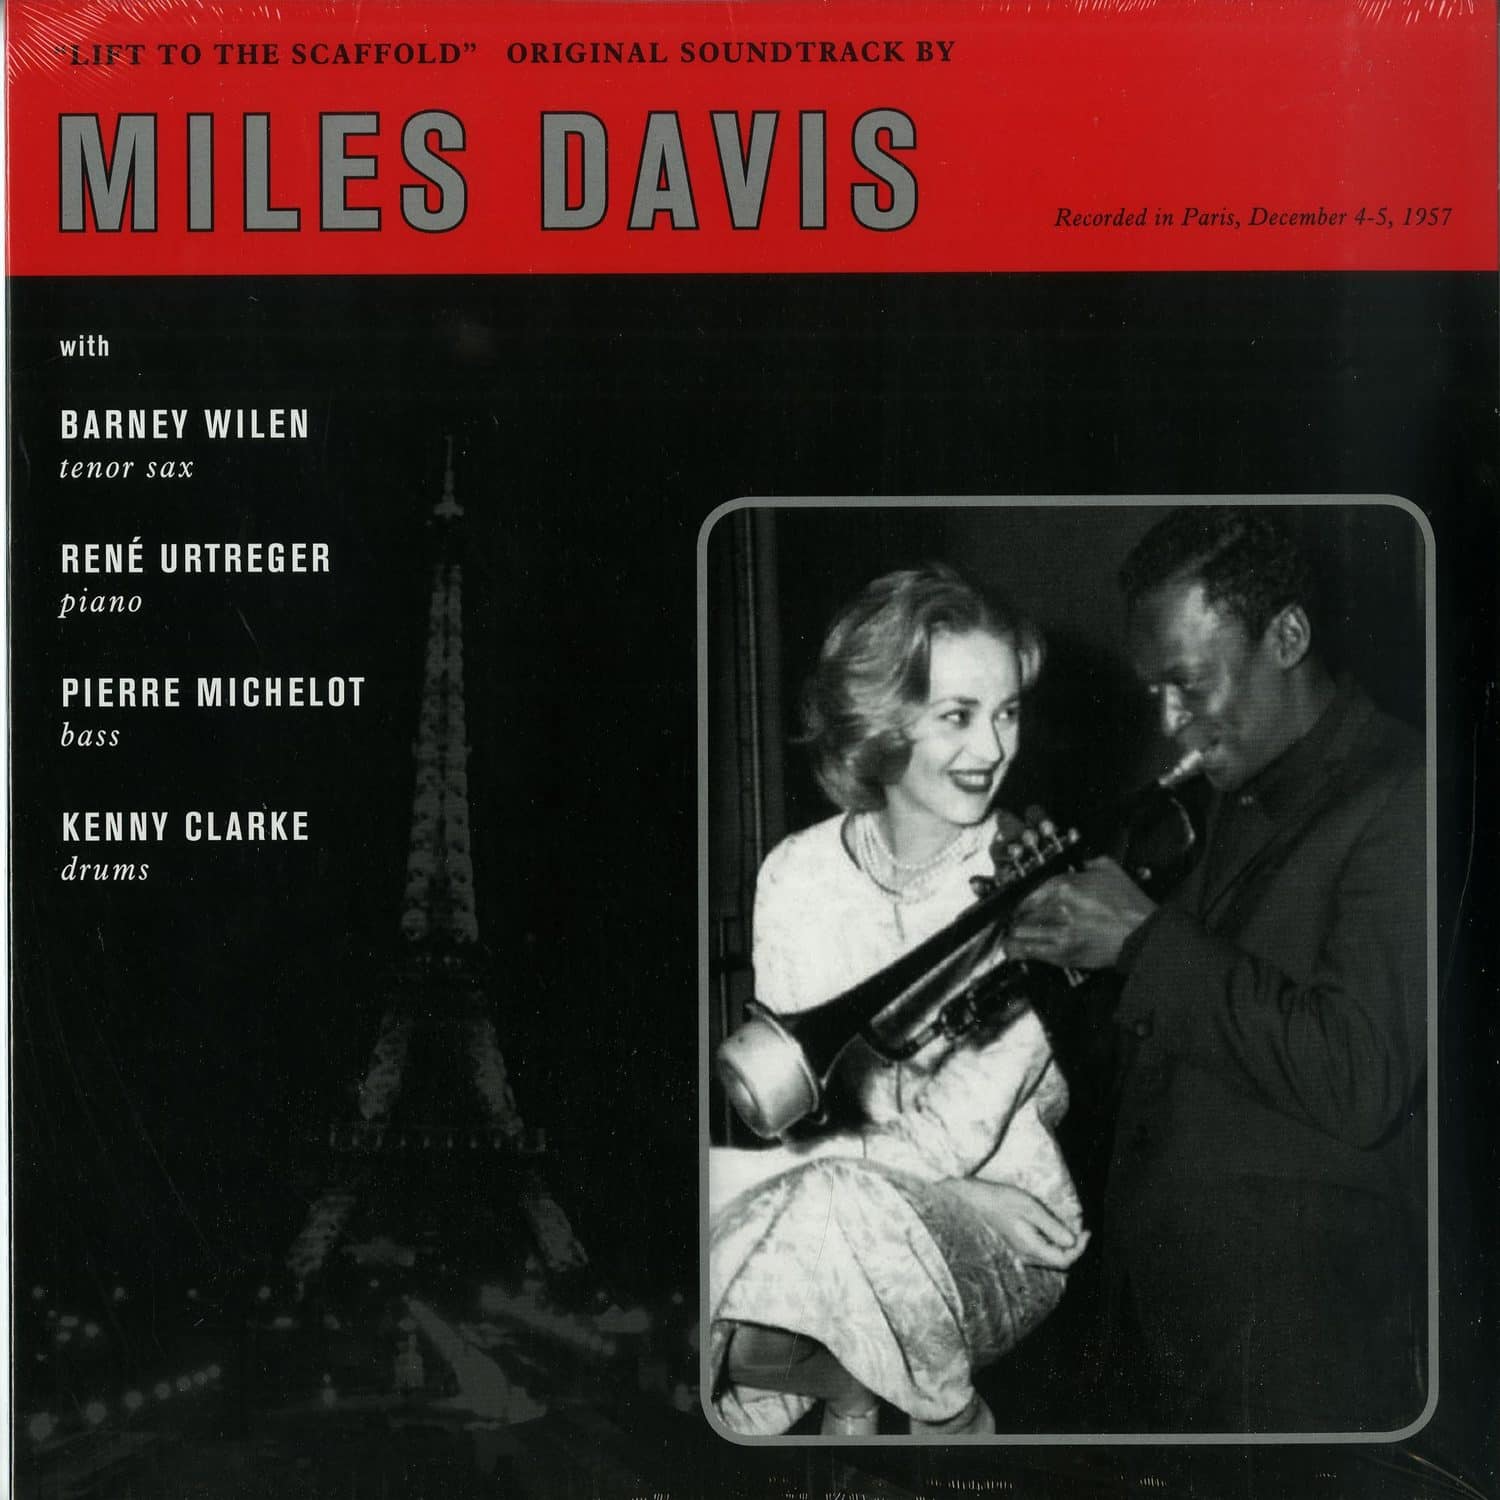 Miles Davis - LIFT TO THE SCAFFOLD 